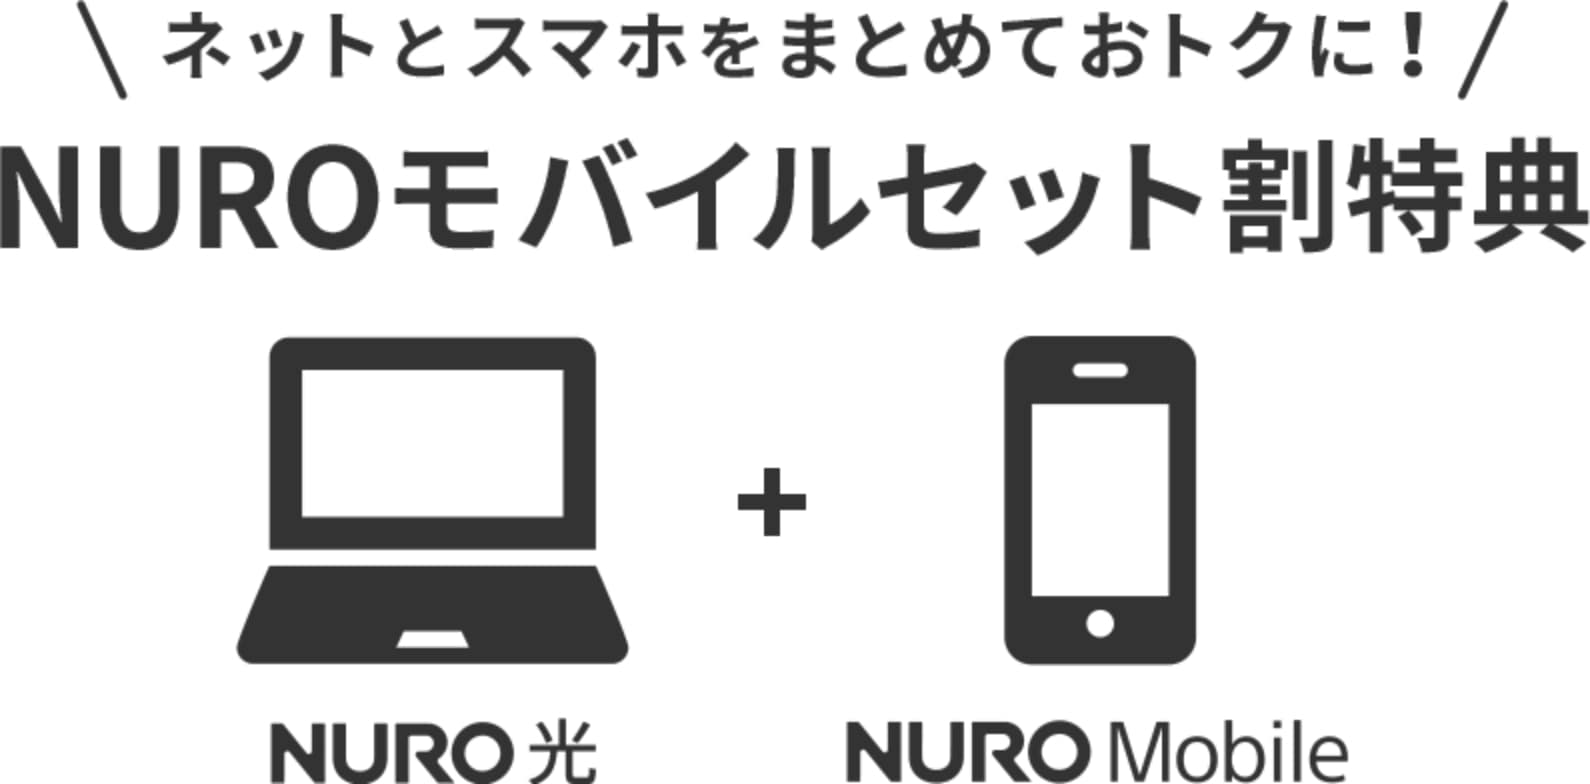 NURO光とNUROモバイルのセット割がある